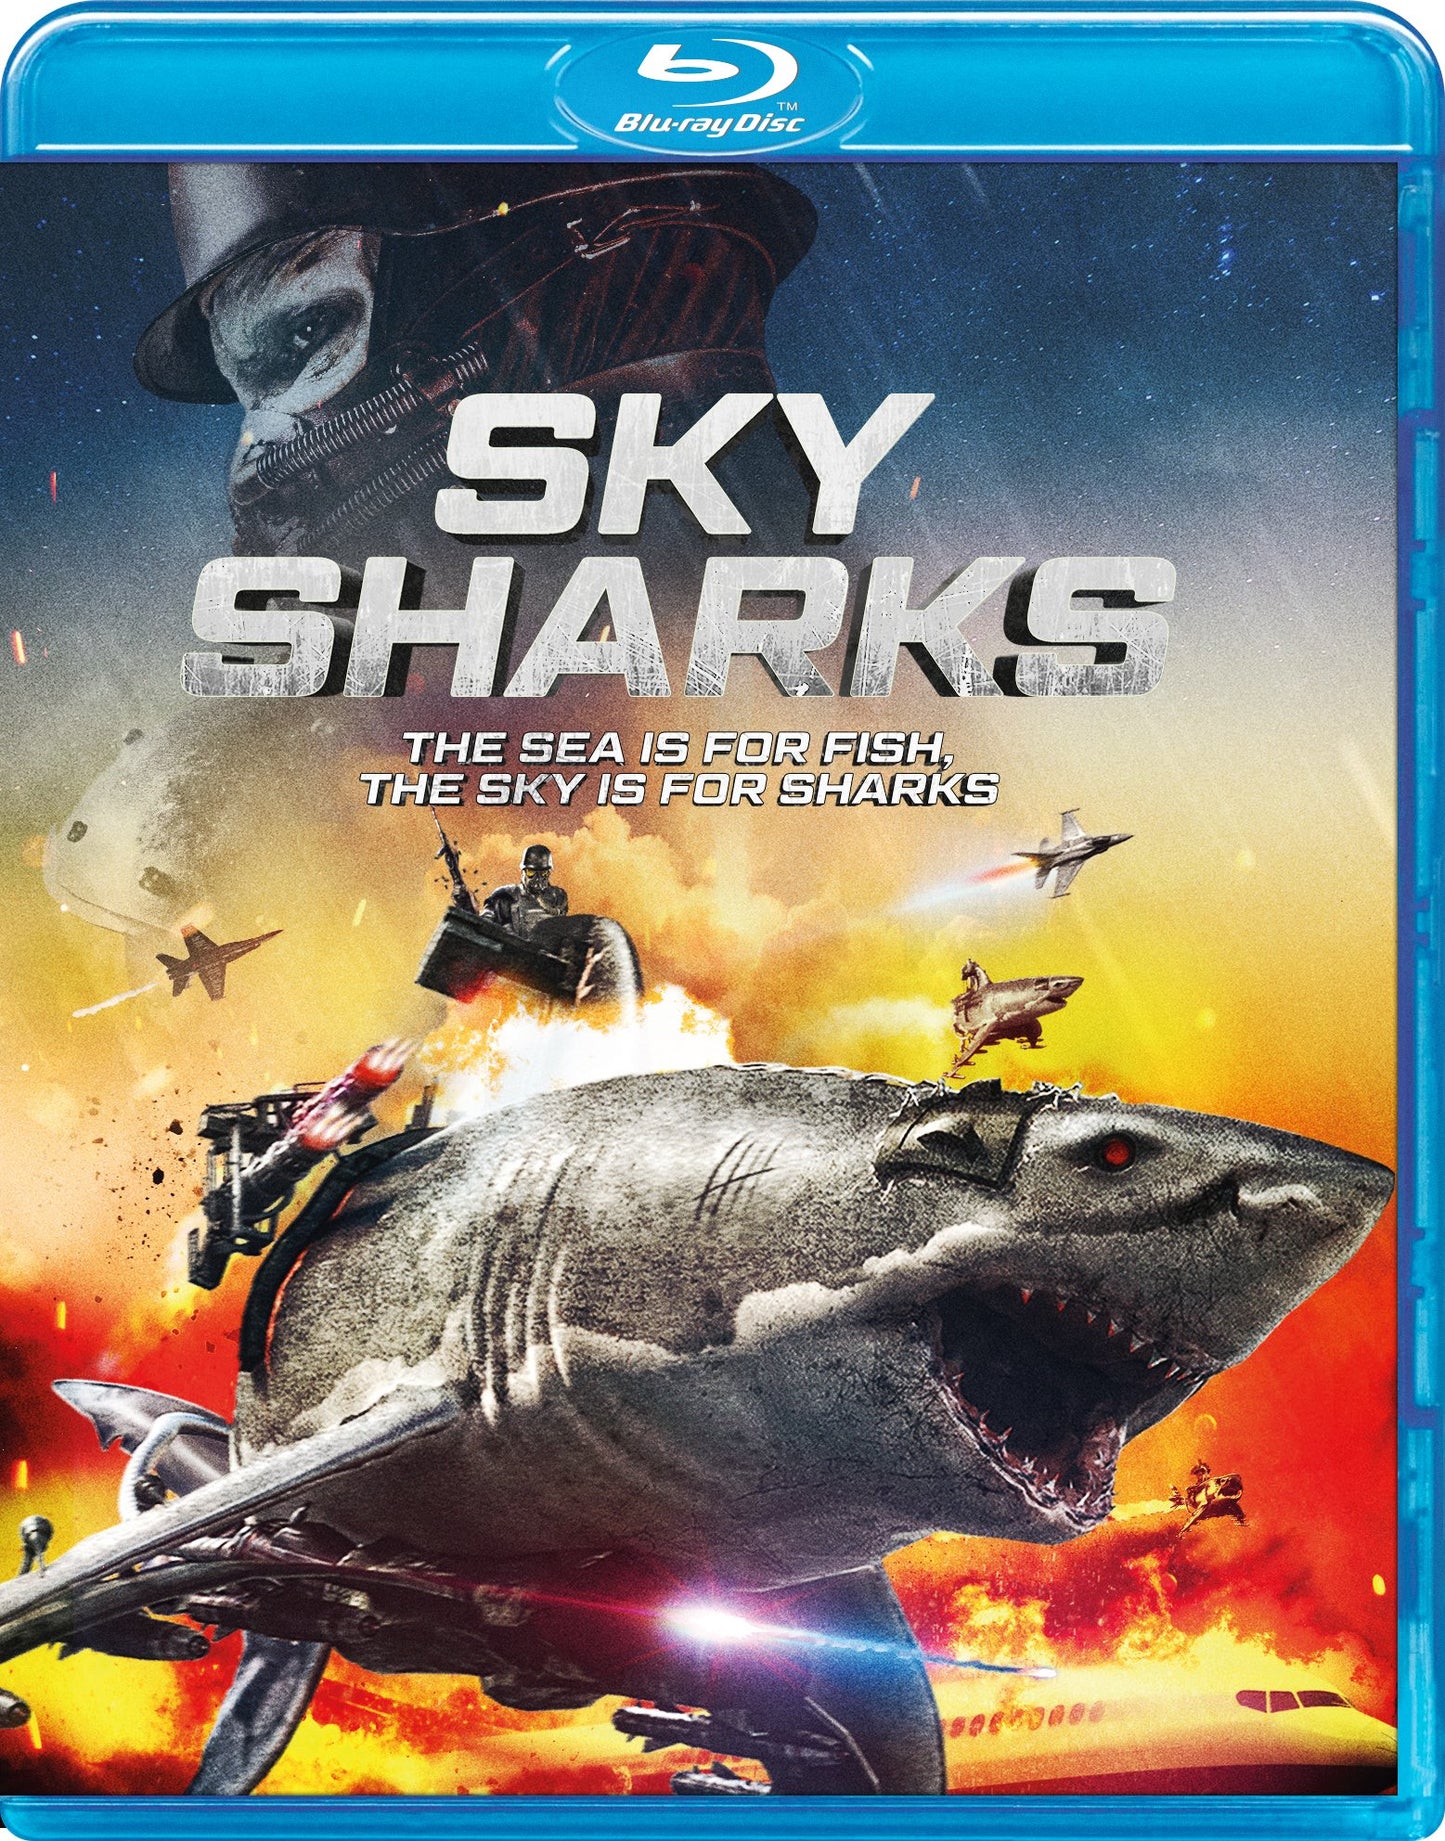 Sky Sharks [Blu-ray] cover art